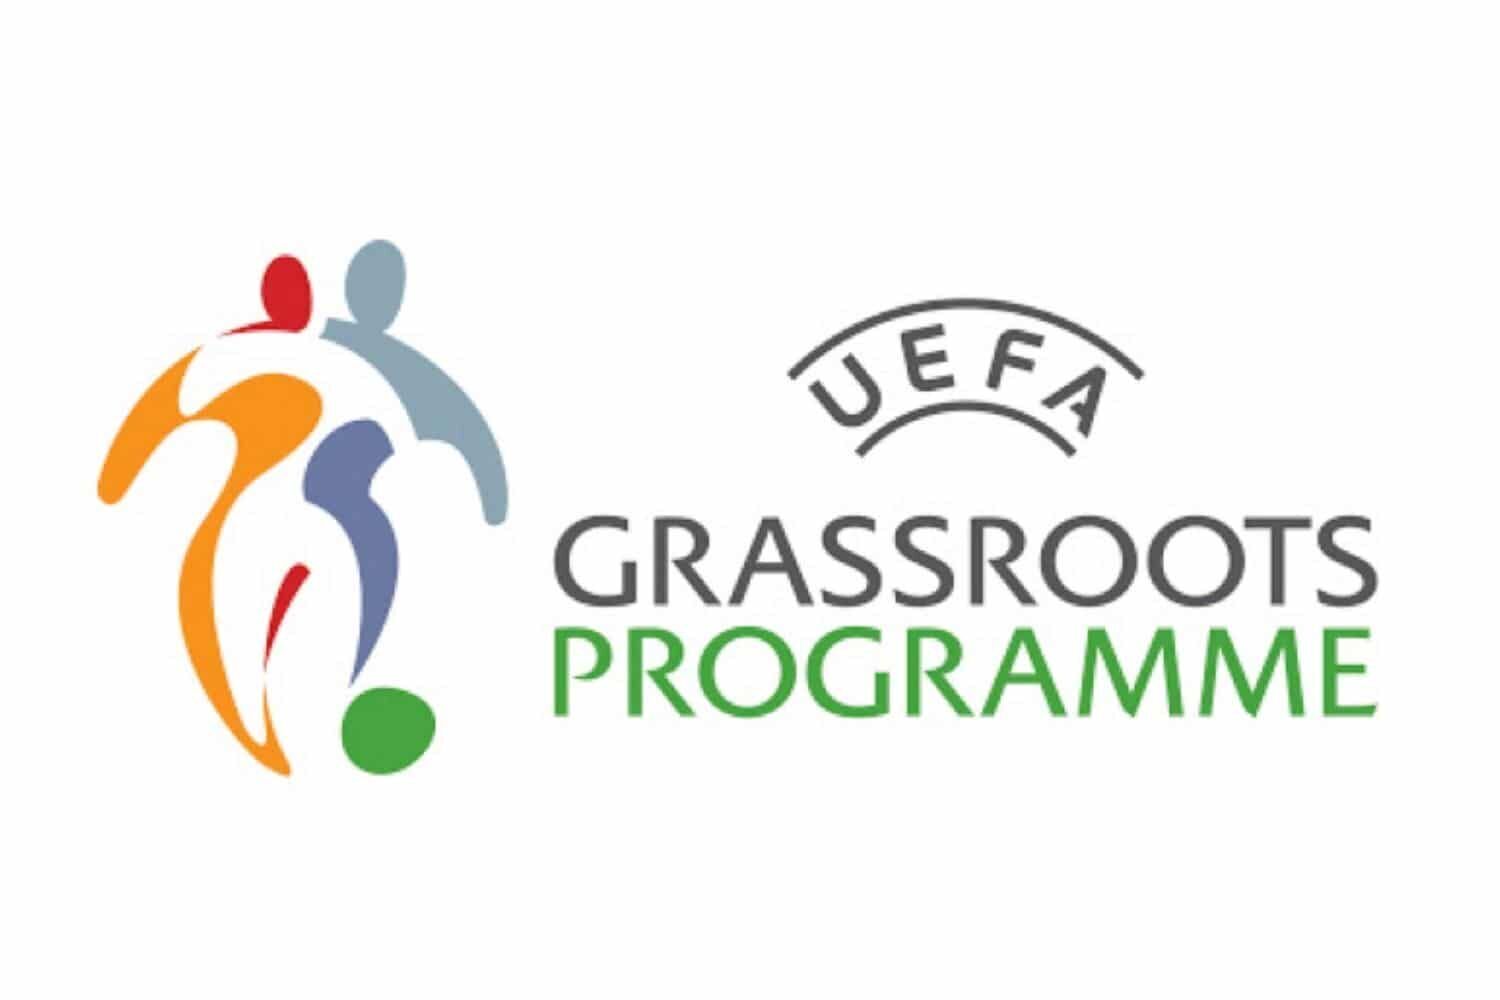 UEFA Grassroots